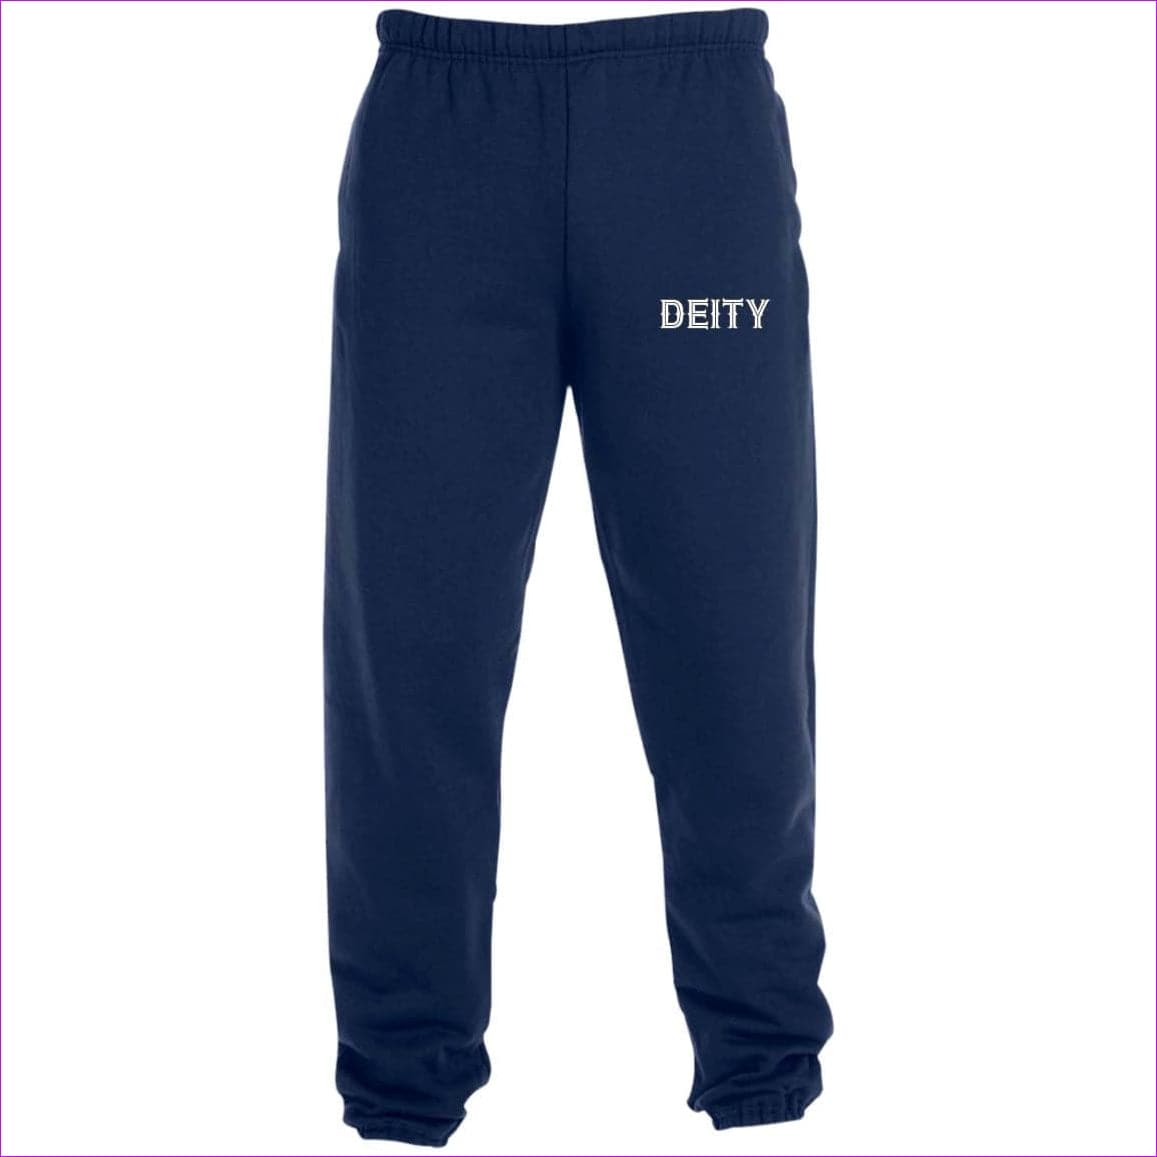 True Navy - Deity Sweatpants with Pockets - unisex jogging pants at TFC&H Co.